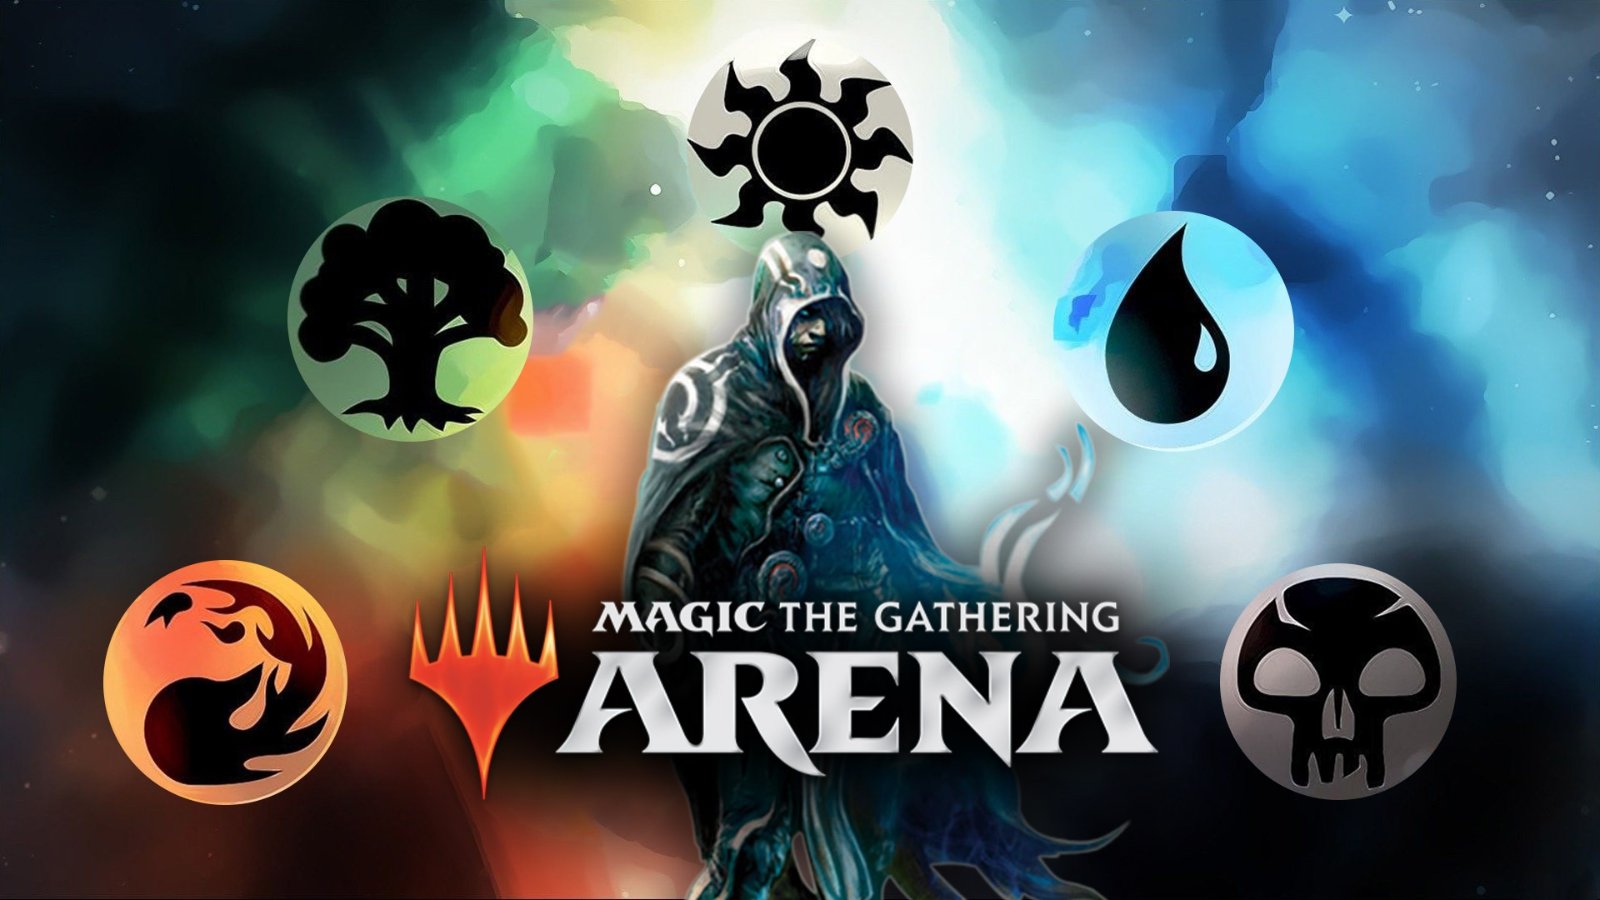 Magic the gathering: Arena